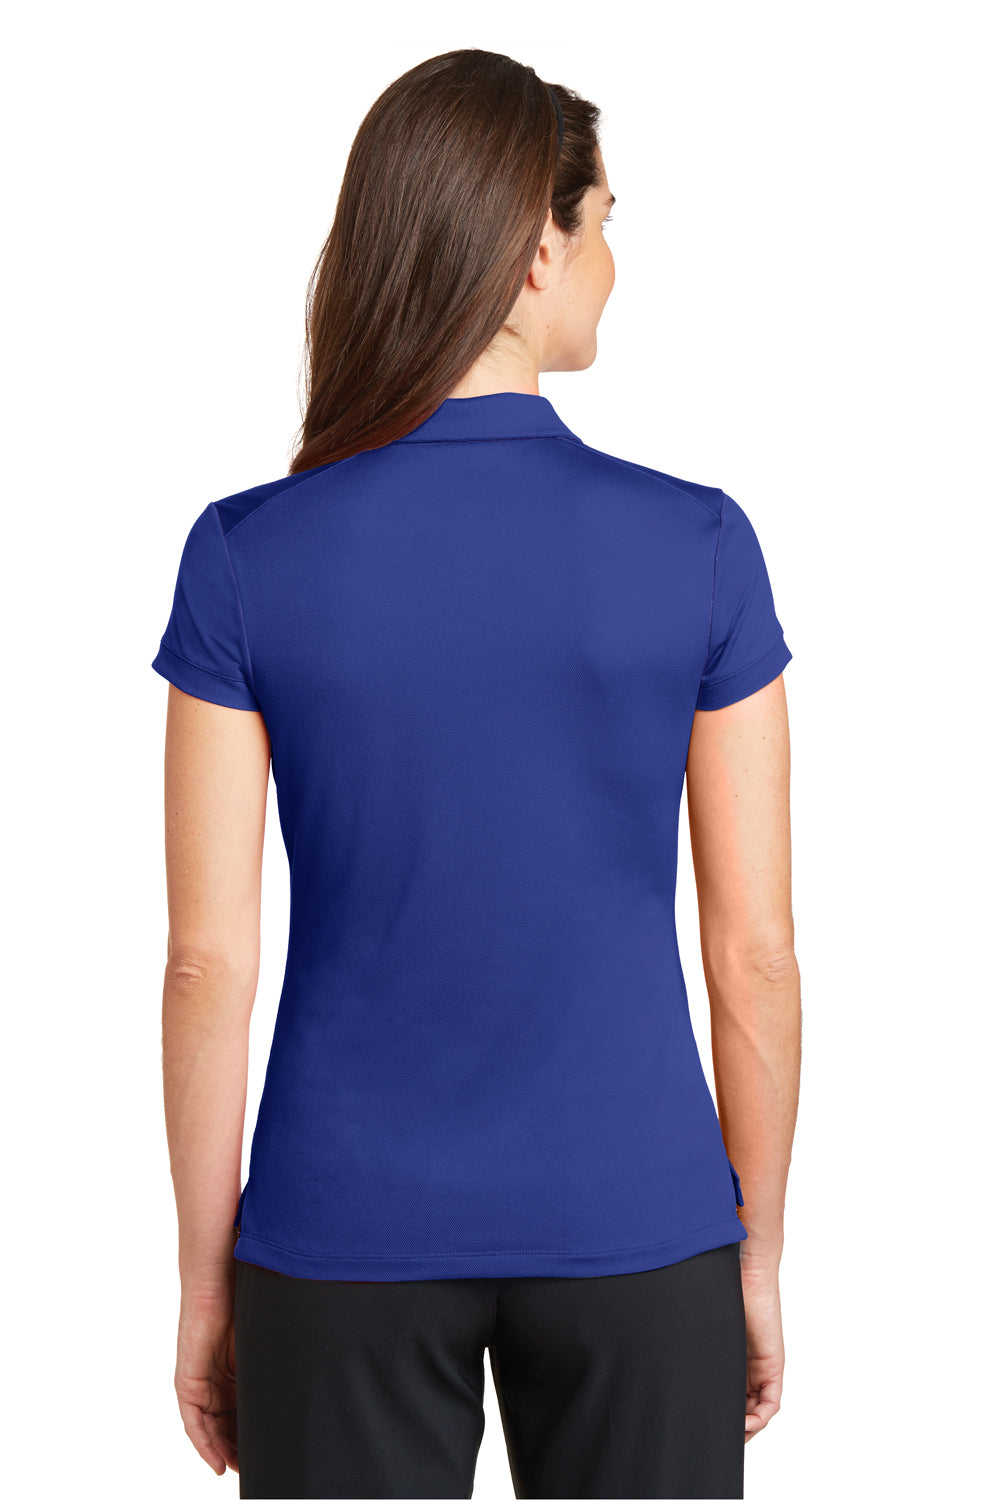 Nike 746100 Womens Icon Dri-Fit Moisture Wicking Short Sleeve Polo Shirt Royal Blue Model Back